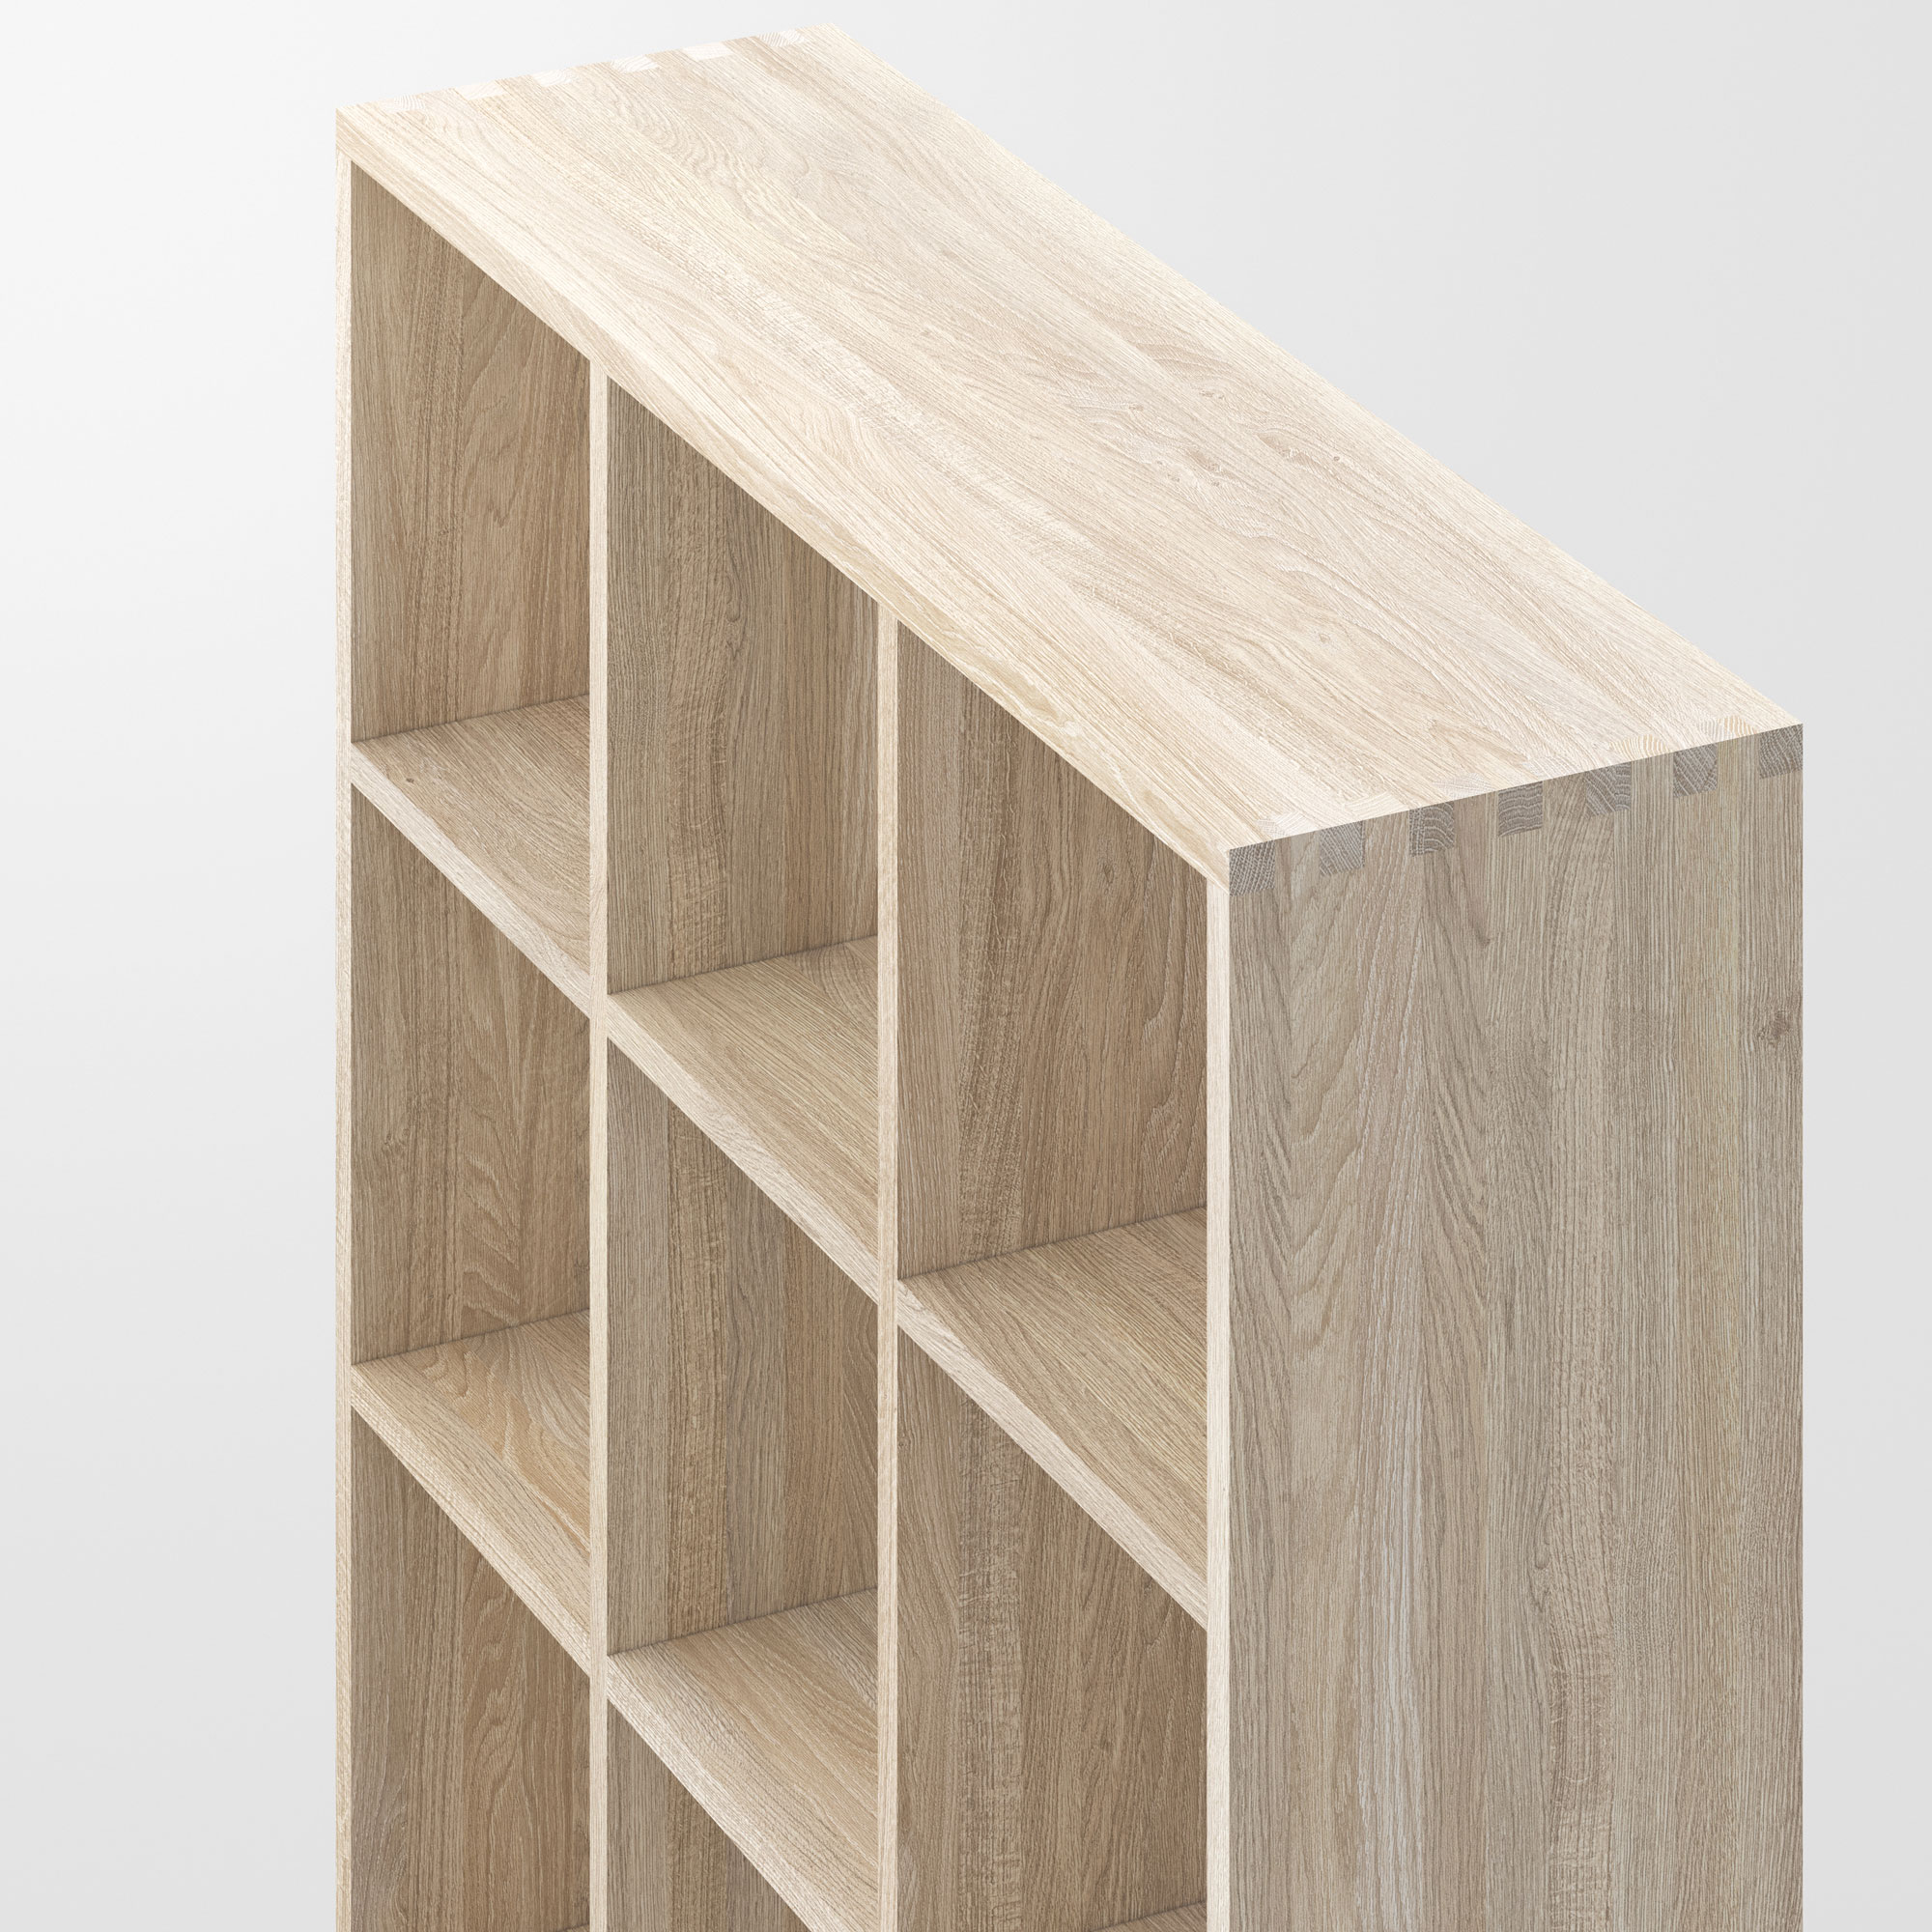 Wooden Designer Shelf PISA cam2 custom made in solid wood by vitamin design